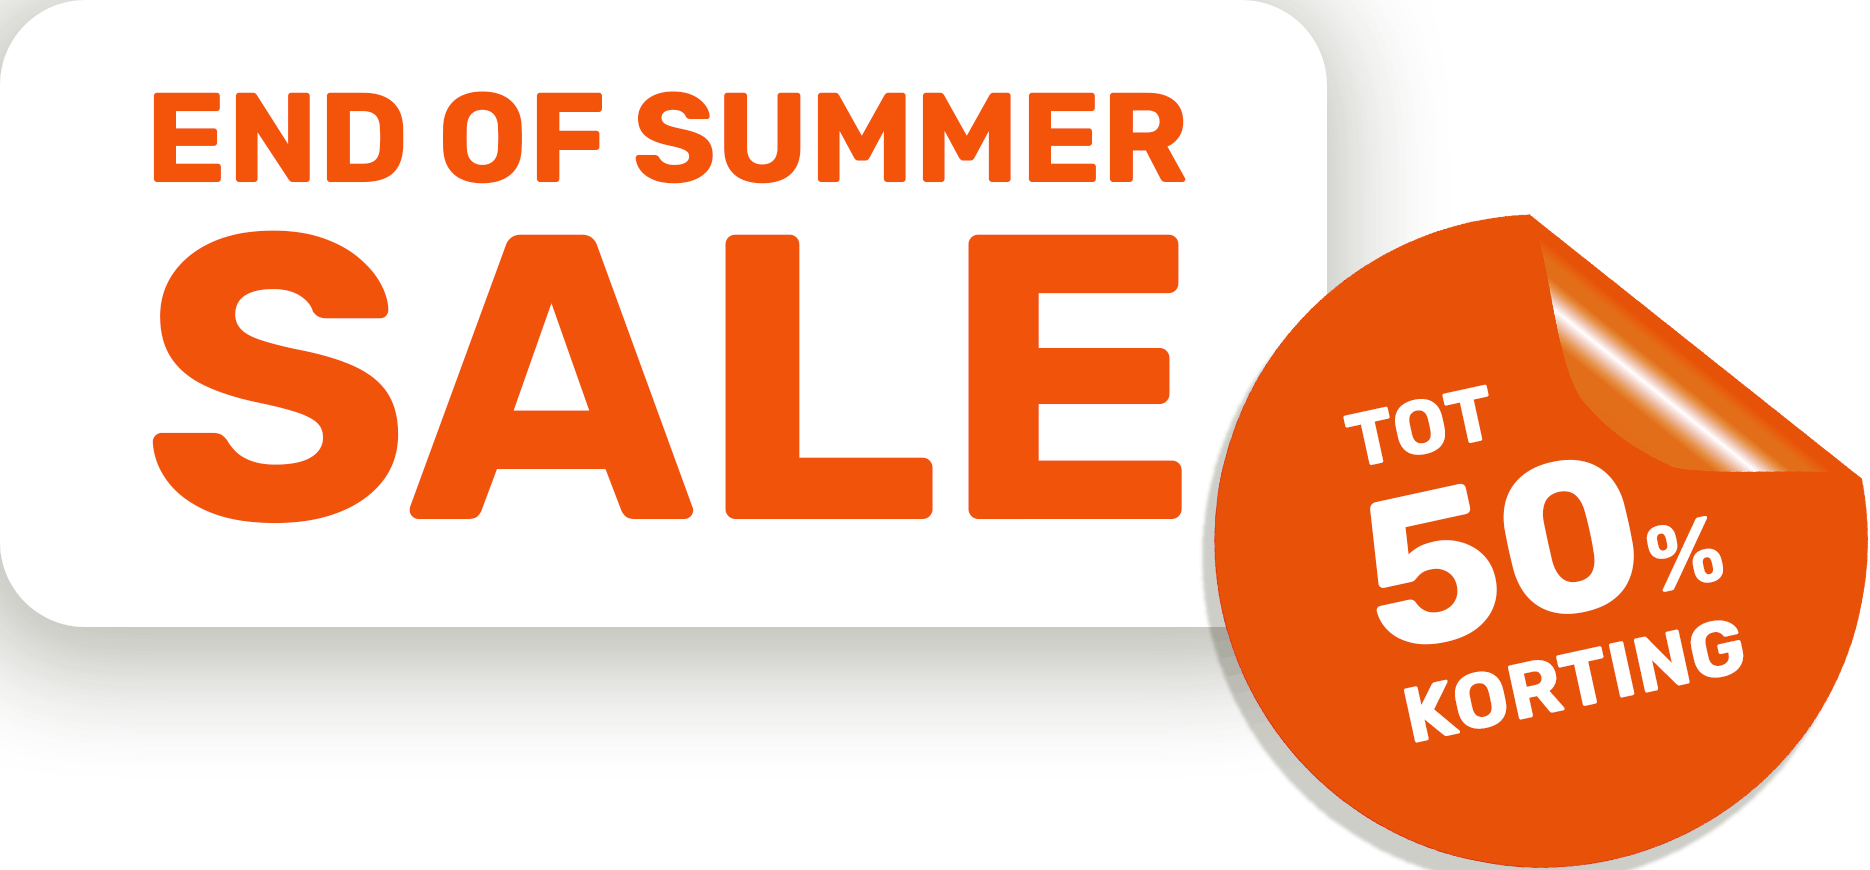 End of summer sale